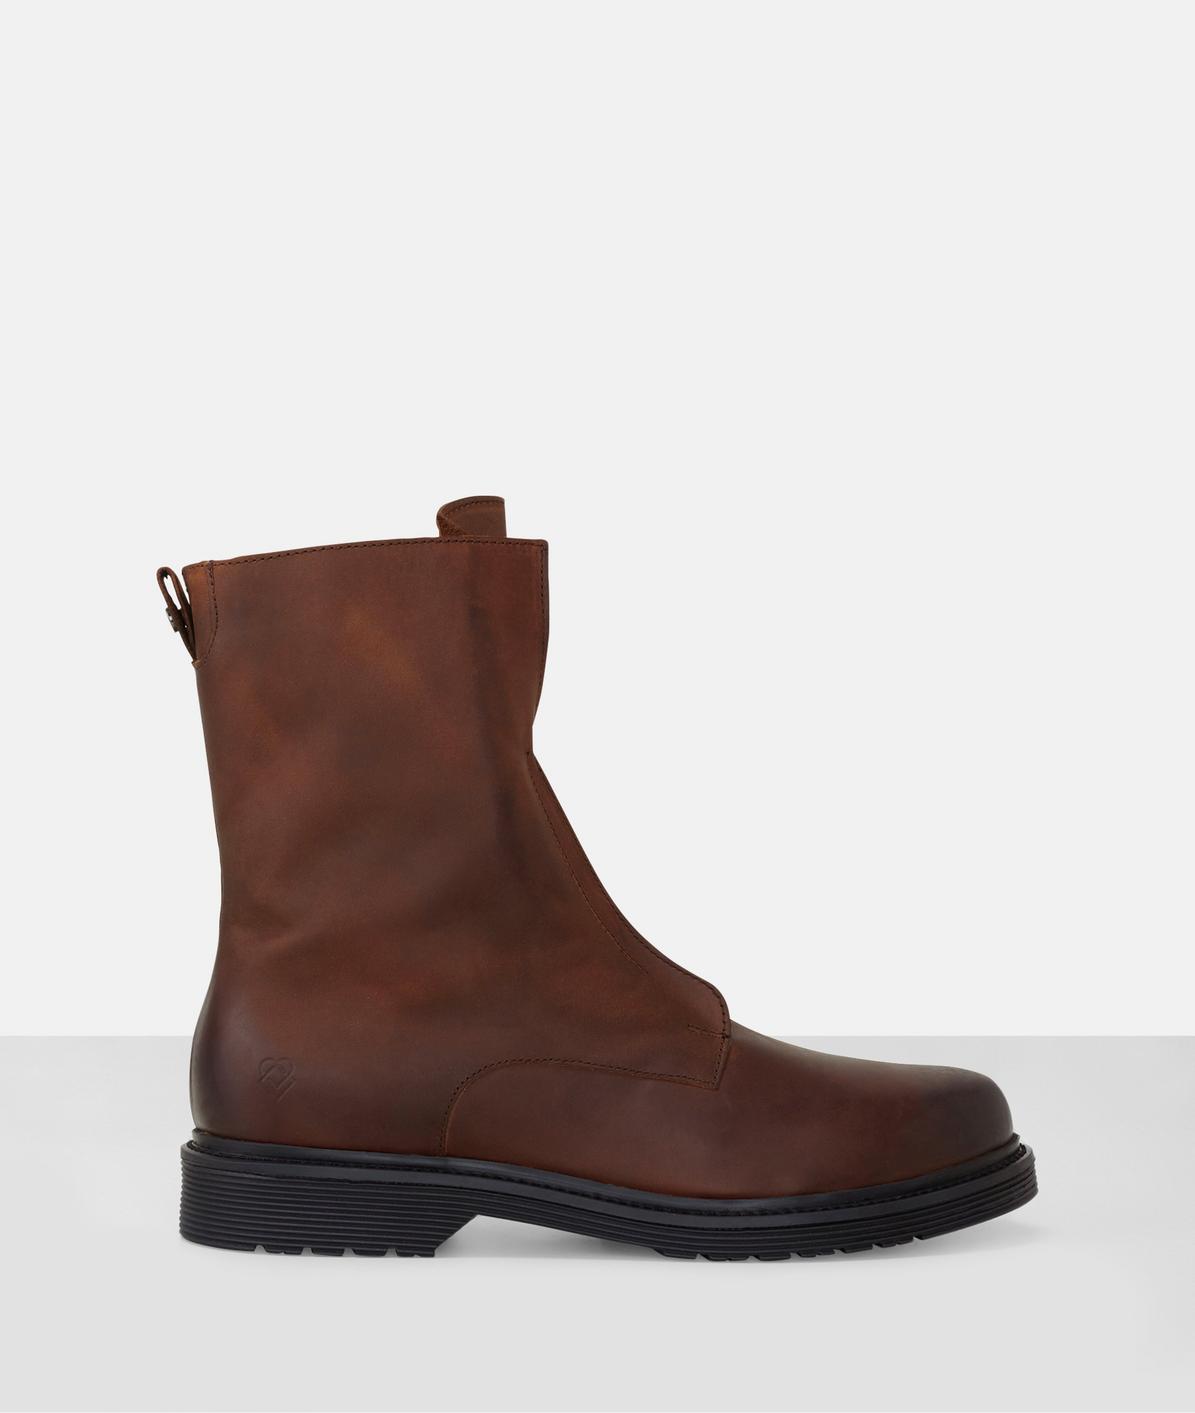 Slip-on leather boots | Liebeskind Berlin